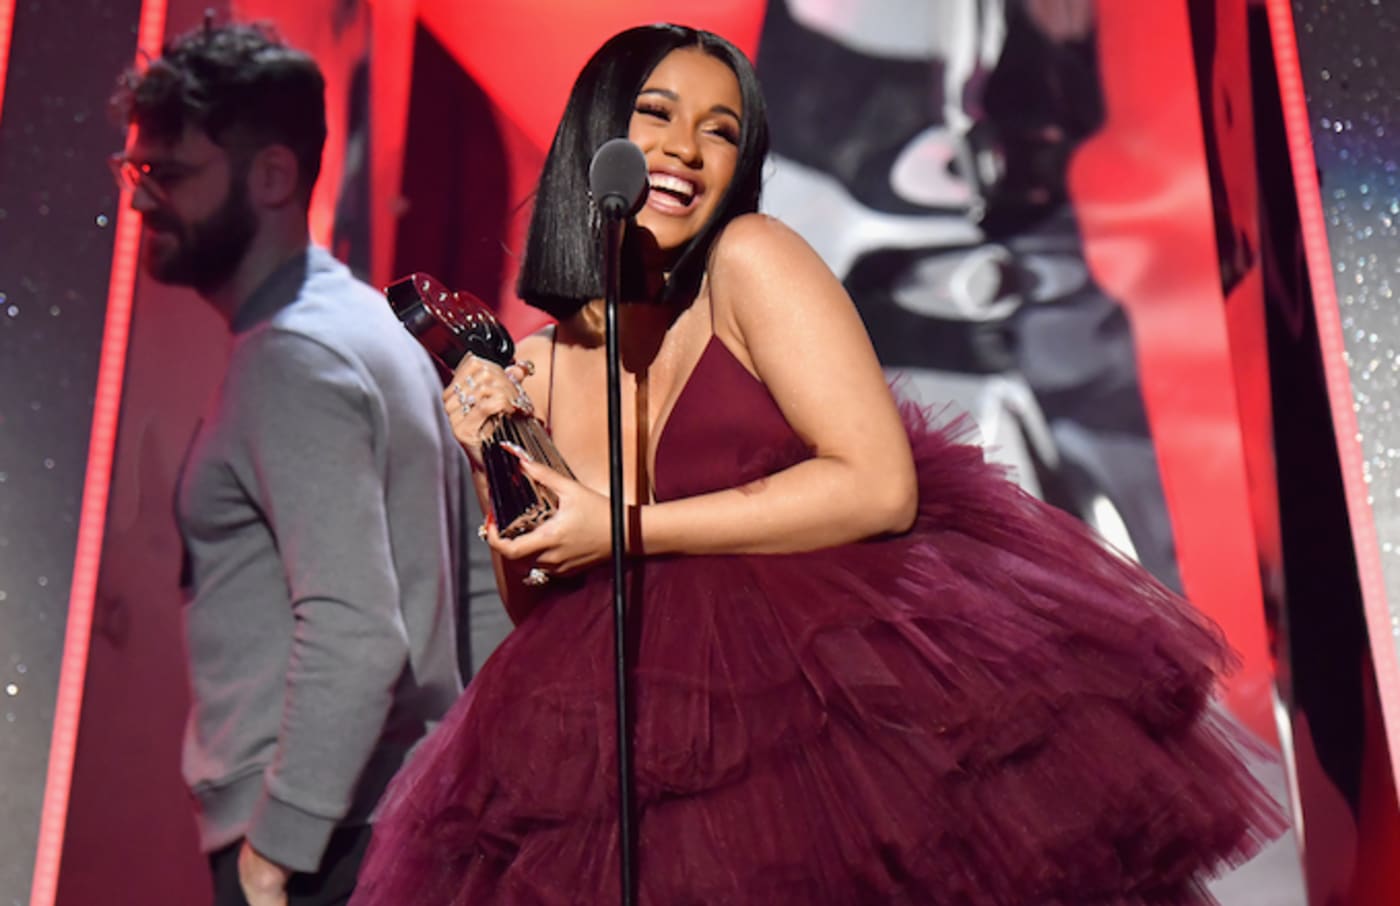 Cardi B at the 2018 iHeartRadio Awards